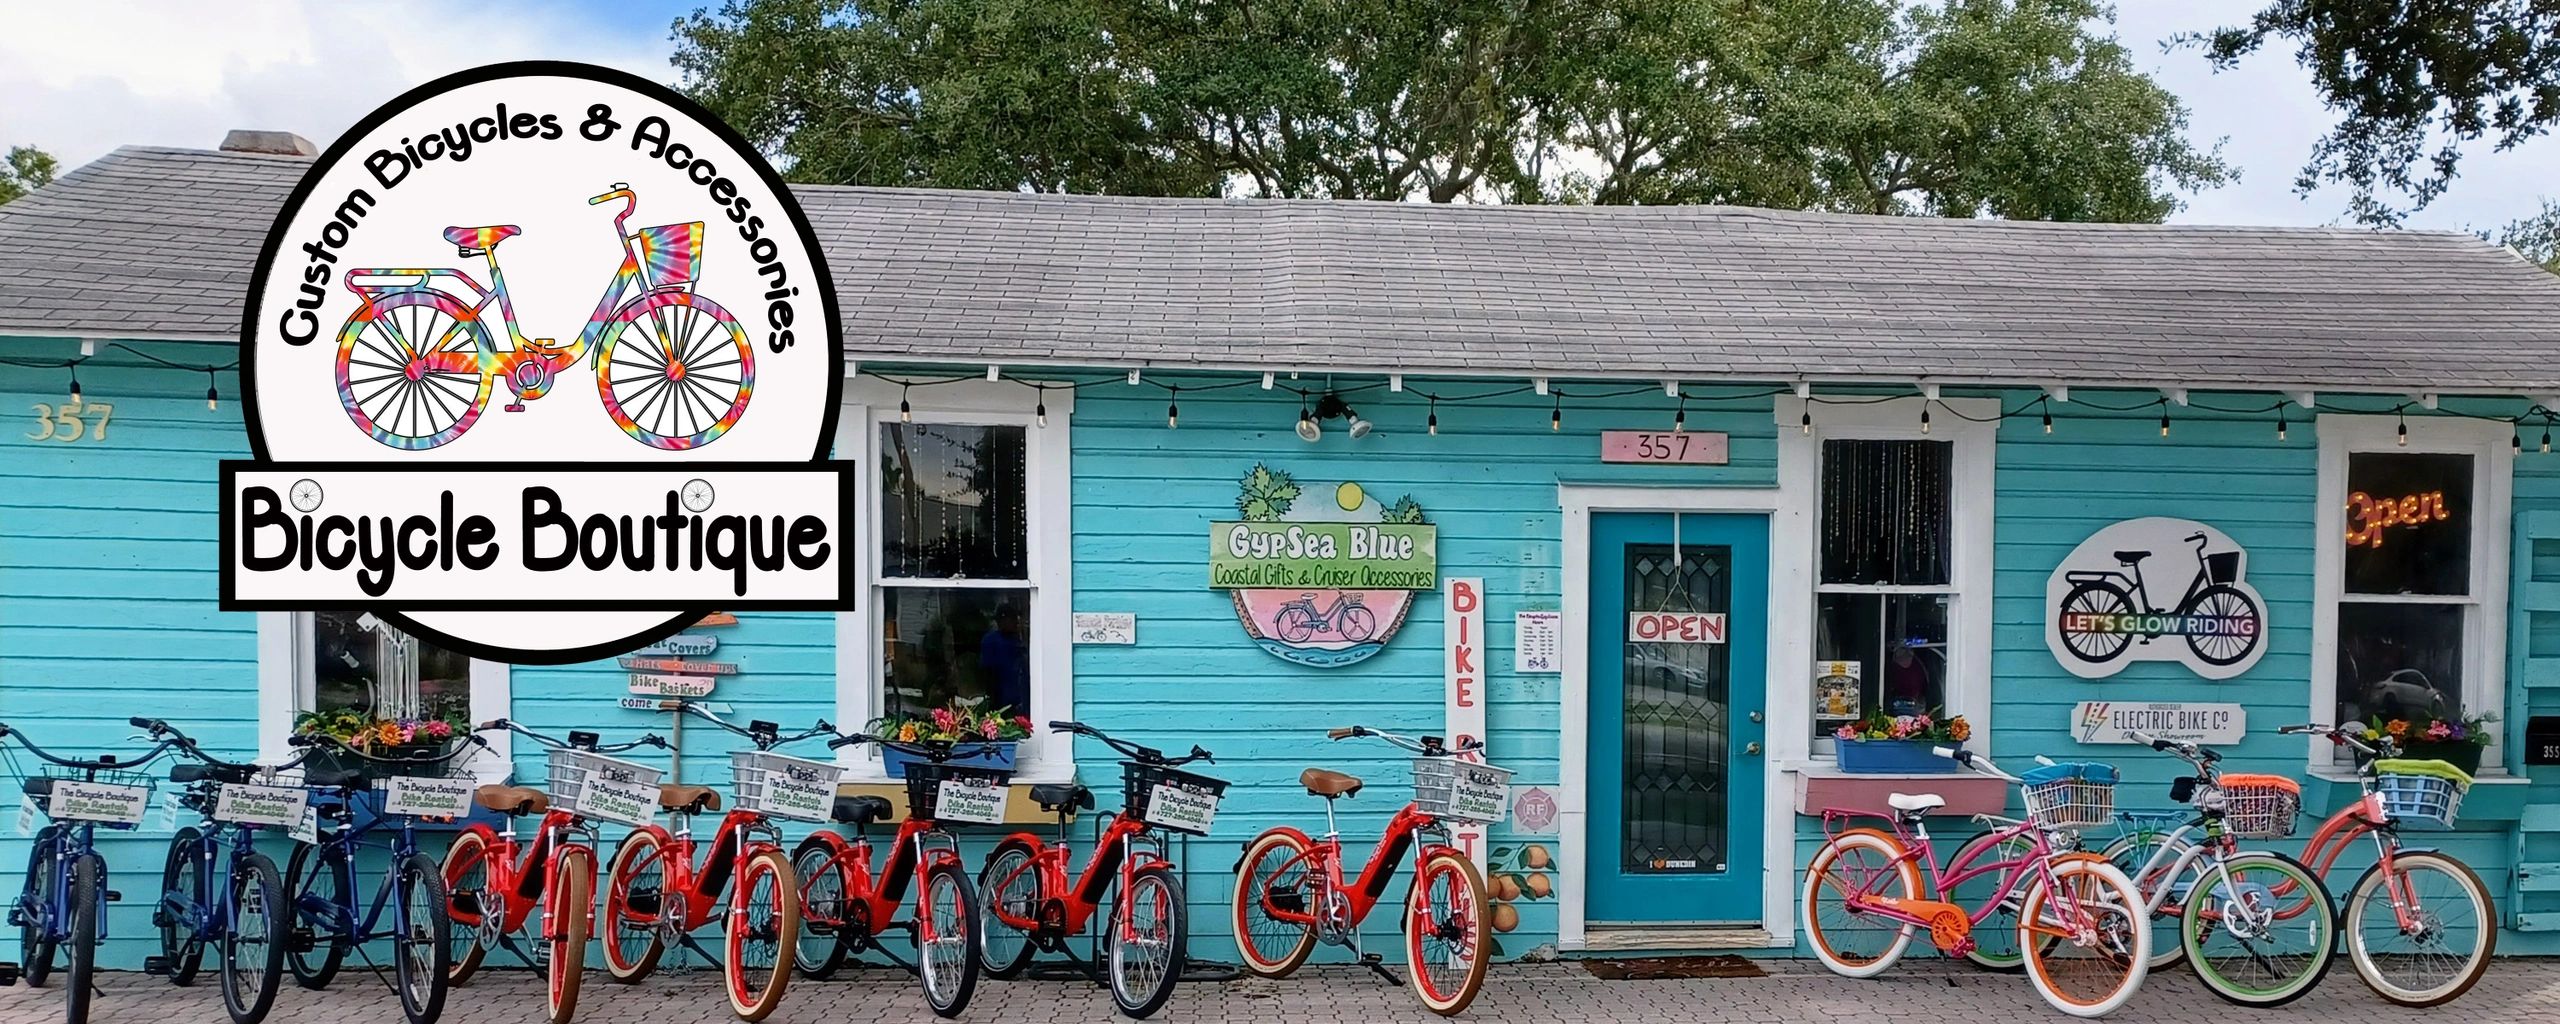 Bike Rentals, Bicycle Sales - The Bicycle Boutique - Dunedin, Florida